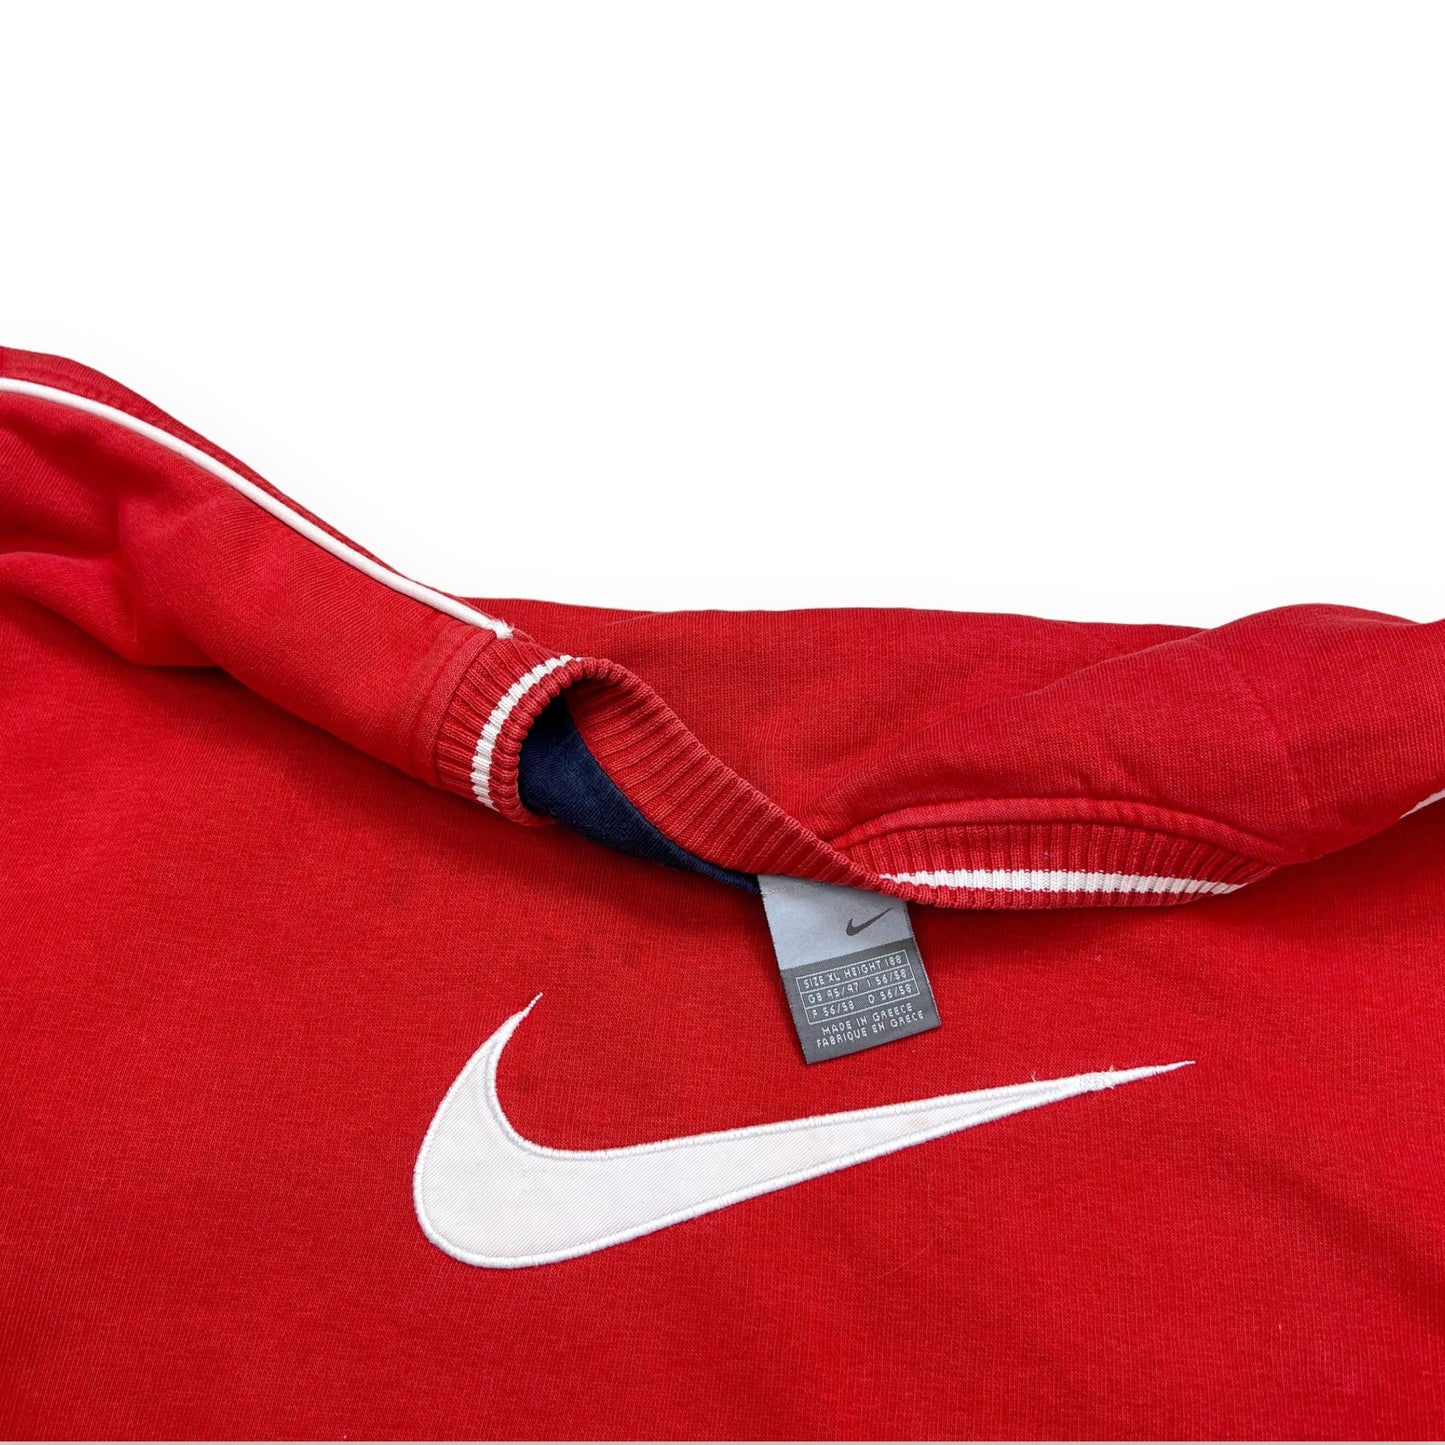 Nike RARE 2000s Swoosh Sweatshirt (XL)